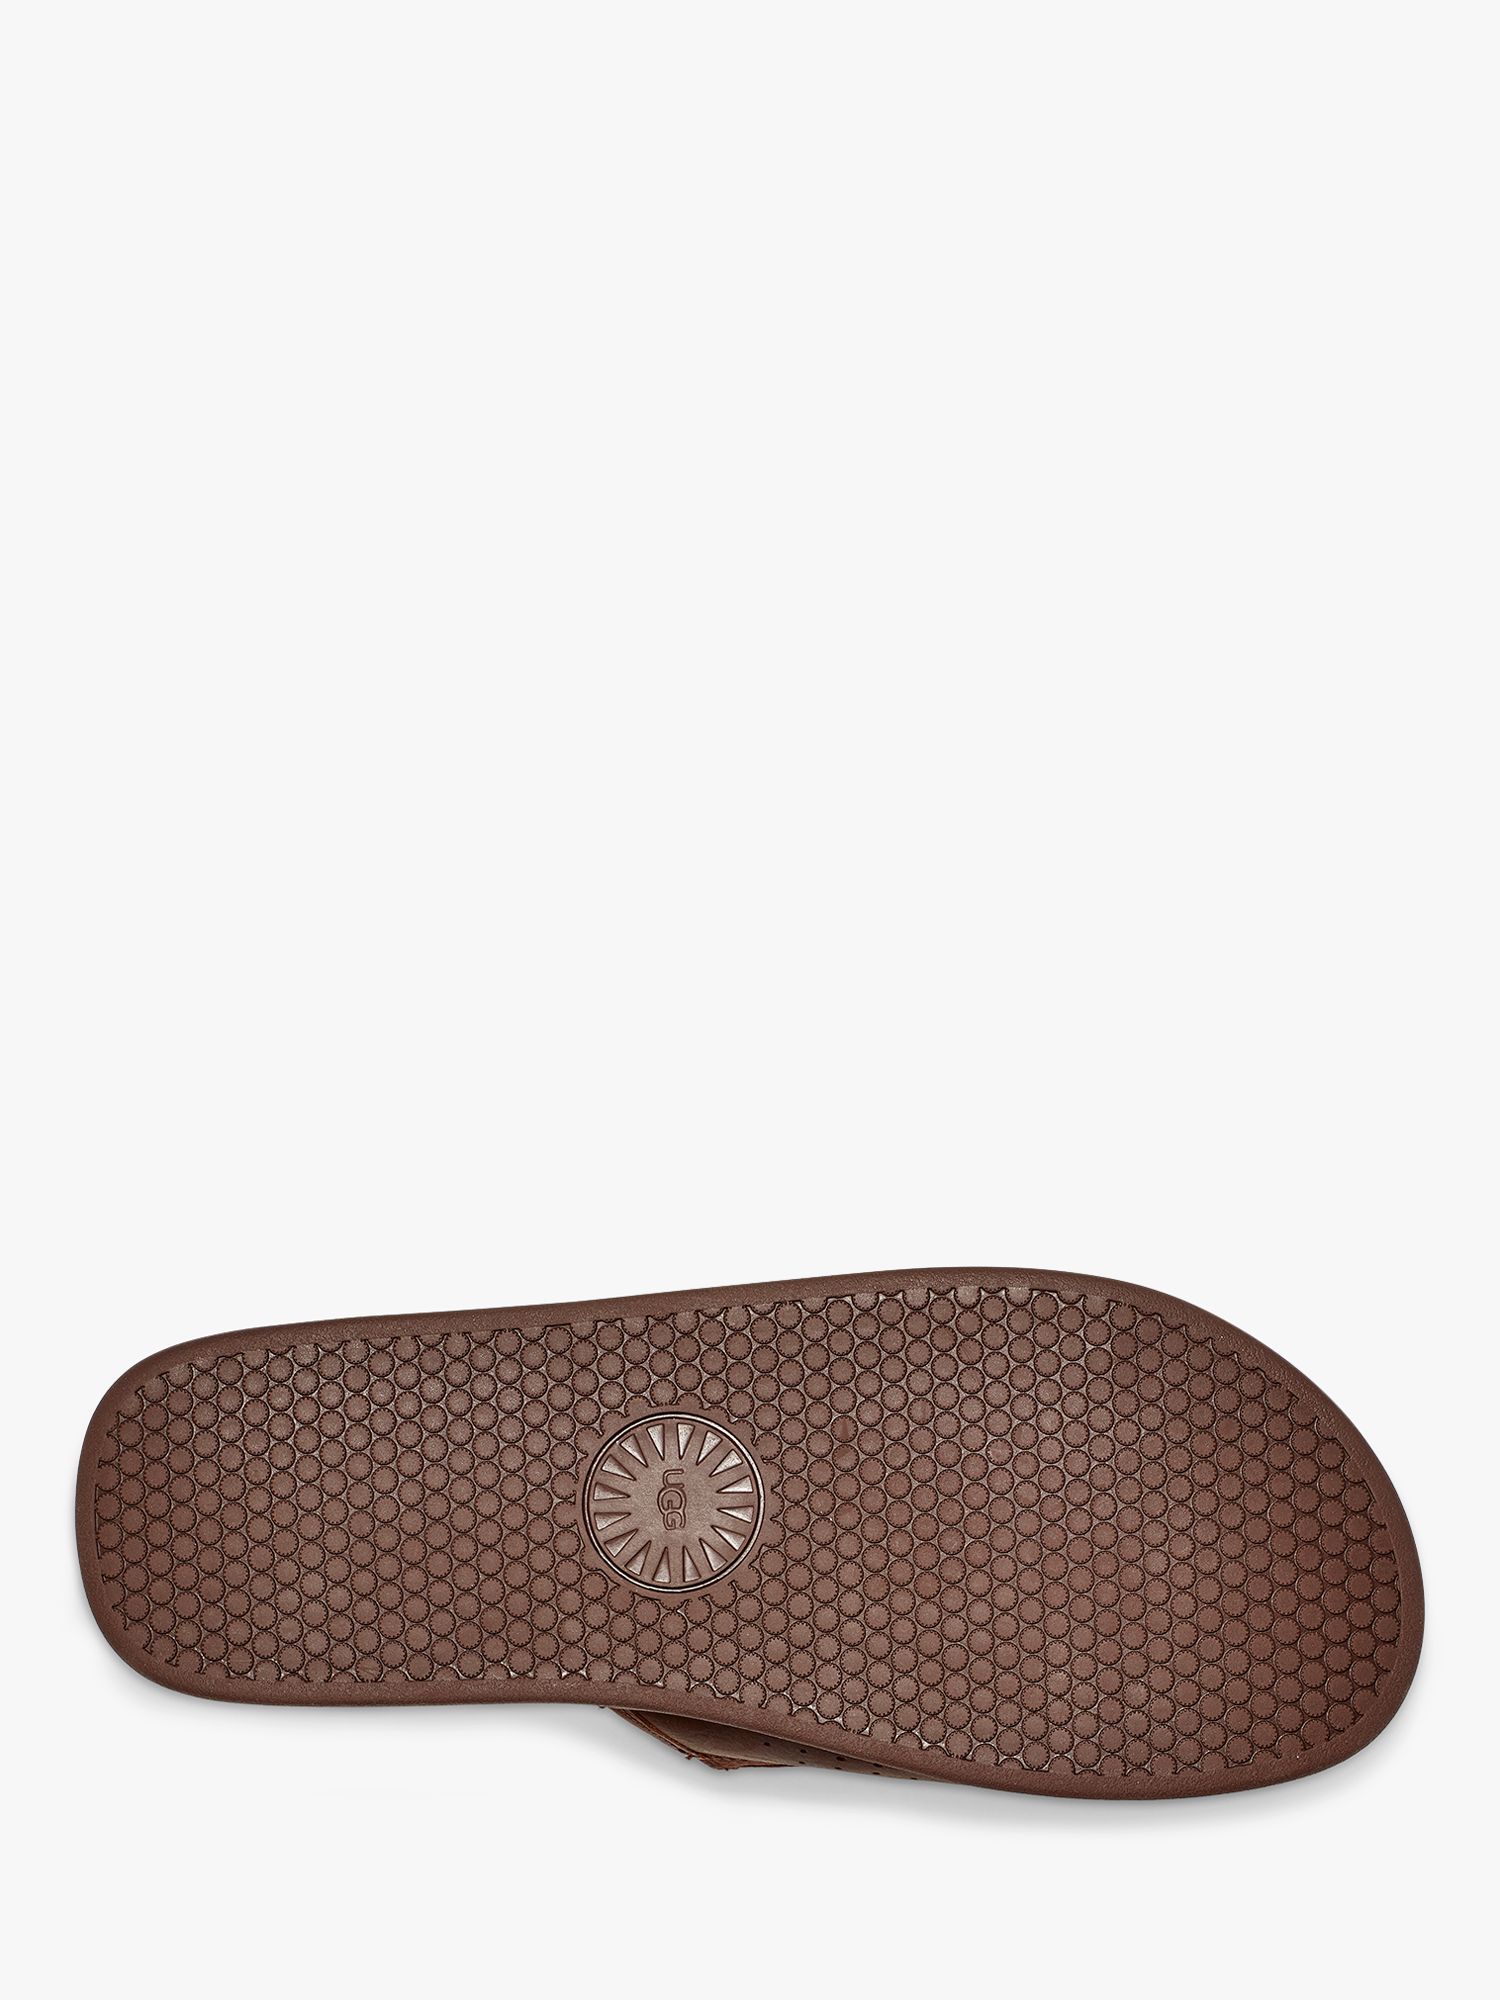 UGG Seaside Leather Slider Sandals, Luggage, 7